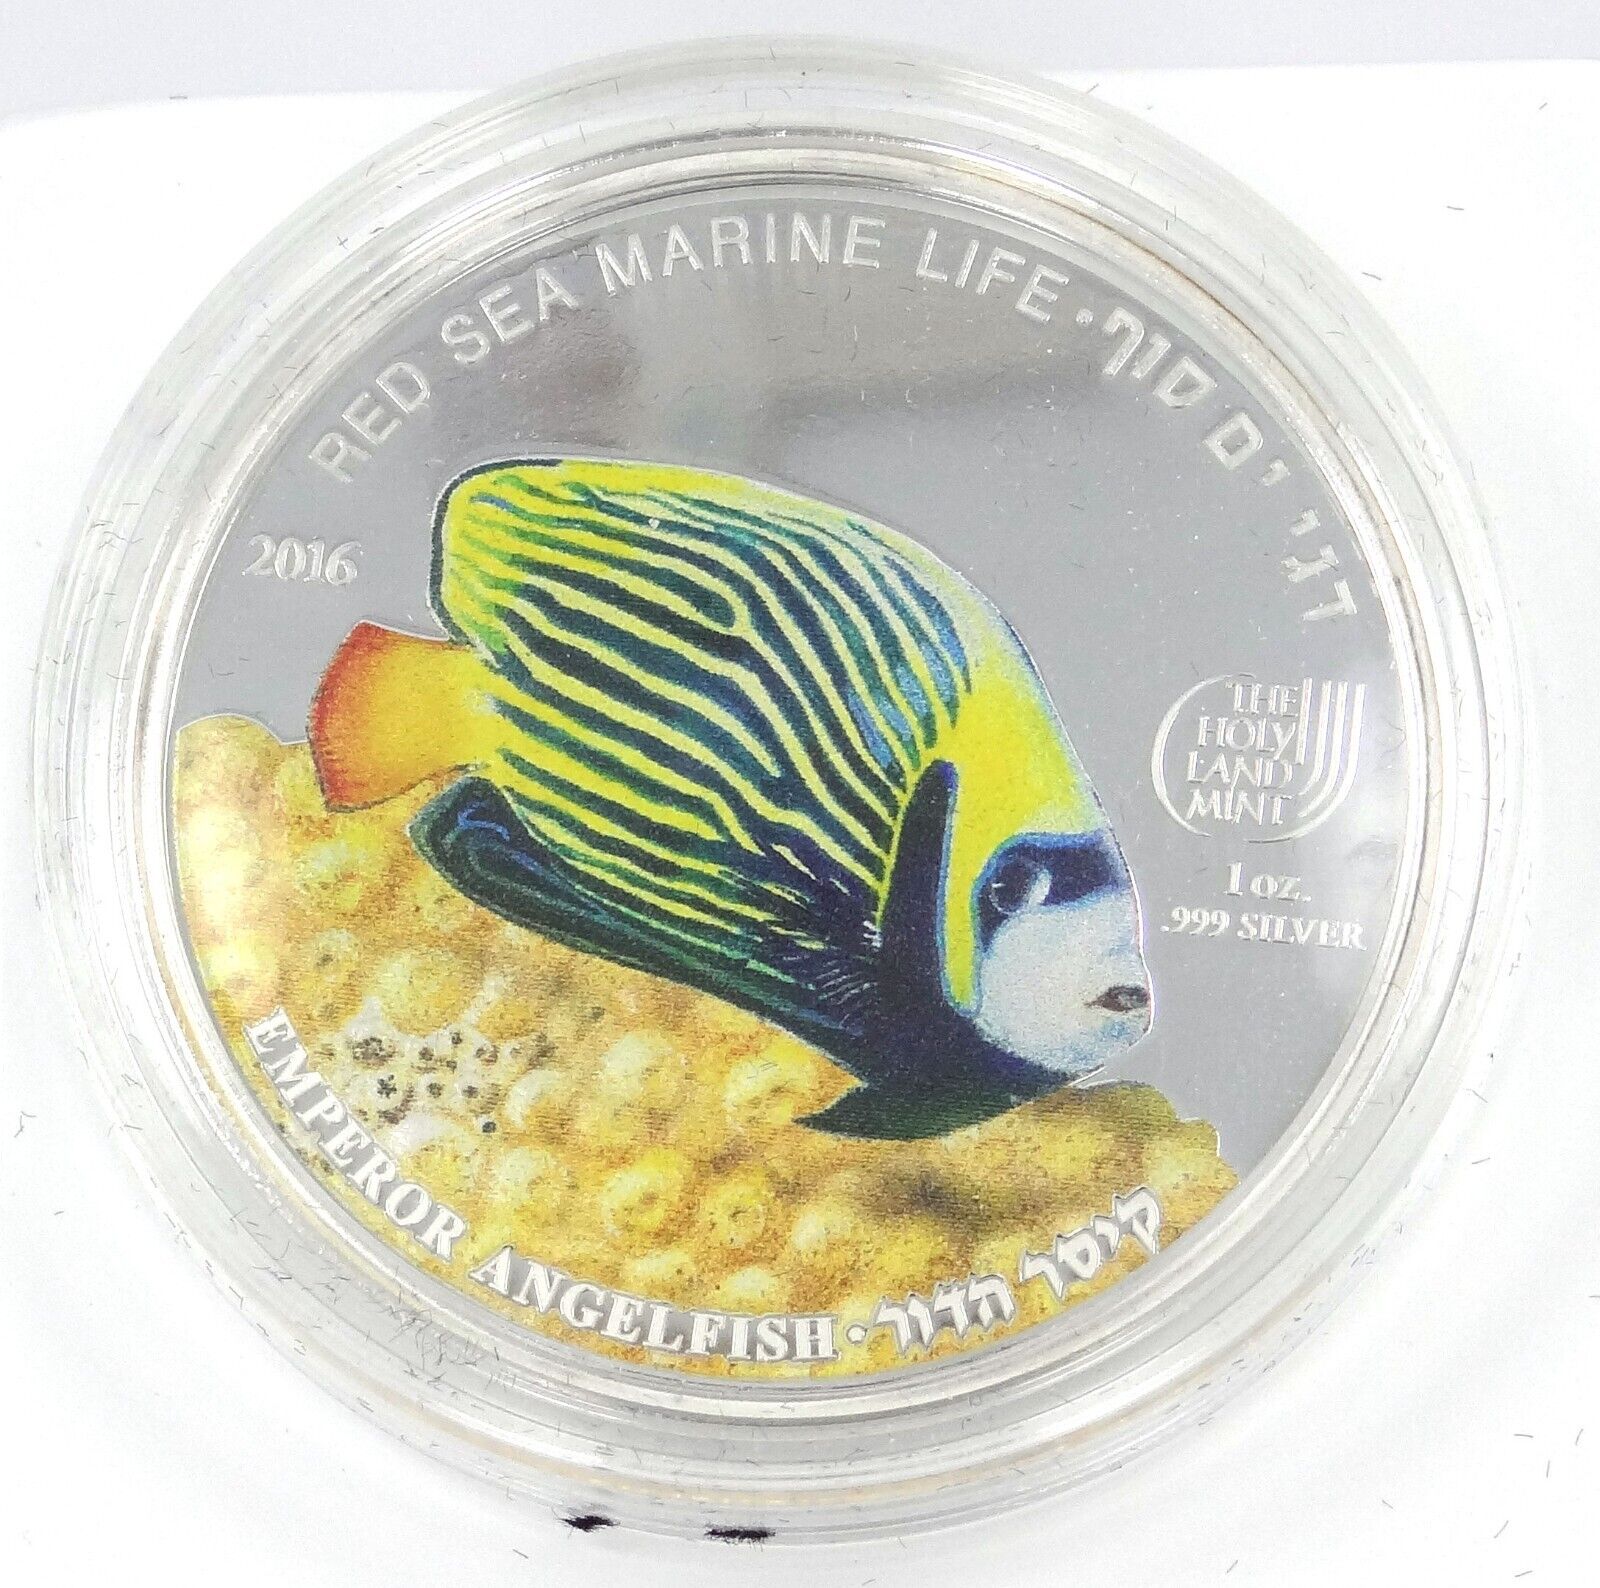 1 Oz Silver Coin 2016 $5 Palau Red Sea Marine Life Israel Mint Emperor Angelfish-classypw.com-2